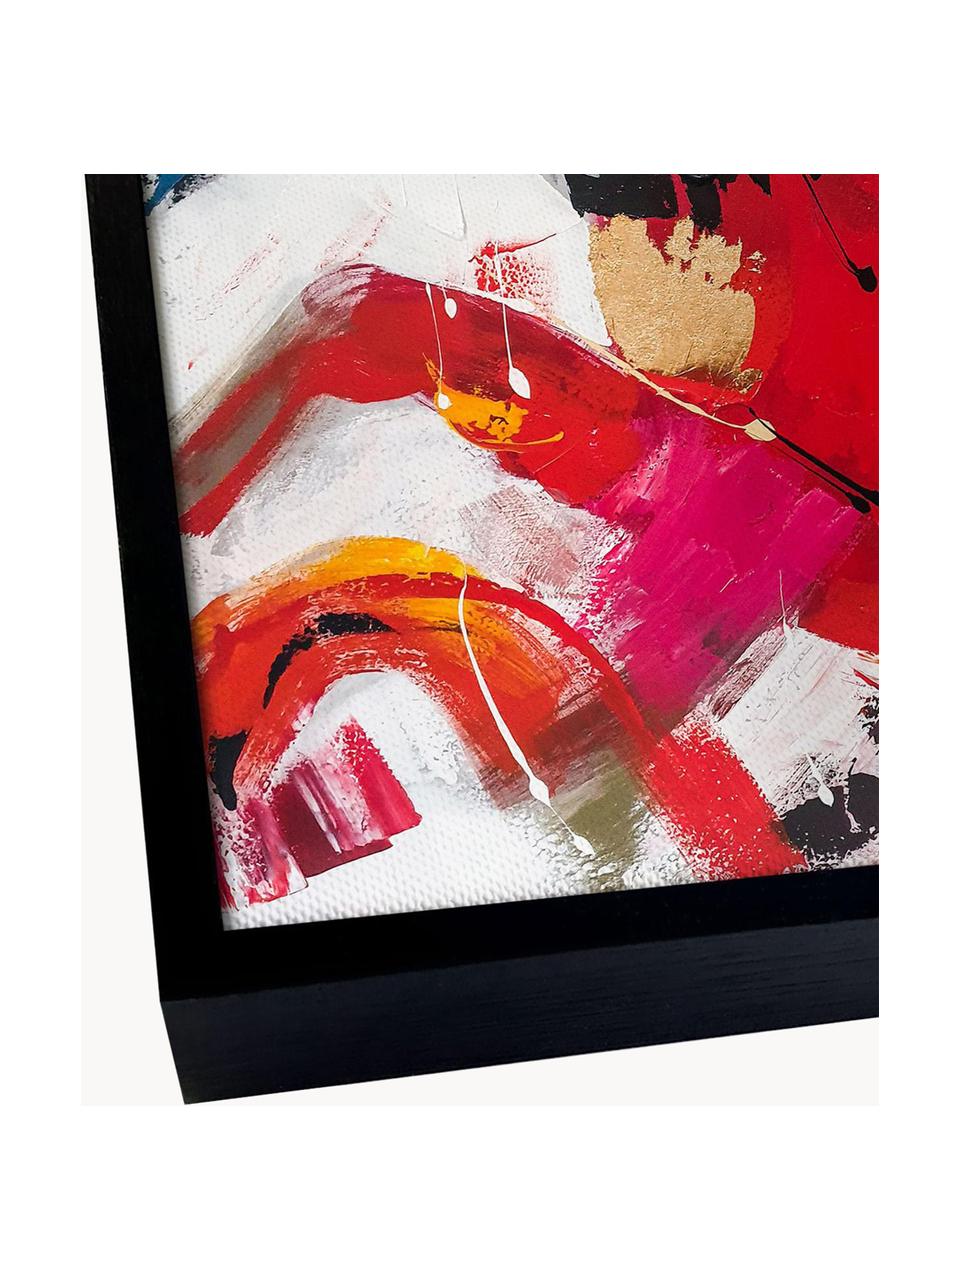 Gerahmtes Leinwandbild Red Emotions, Bild: Leinwand, Rahmen: Holz, Bunt, B 103 x H 103 cm